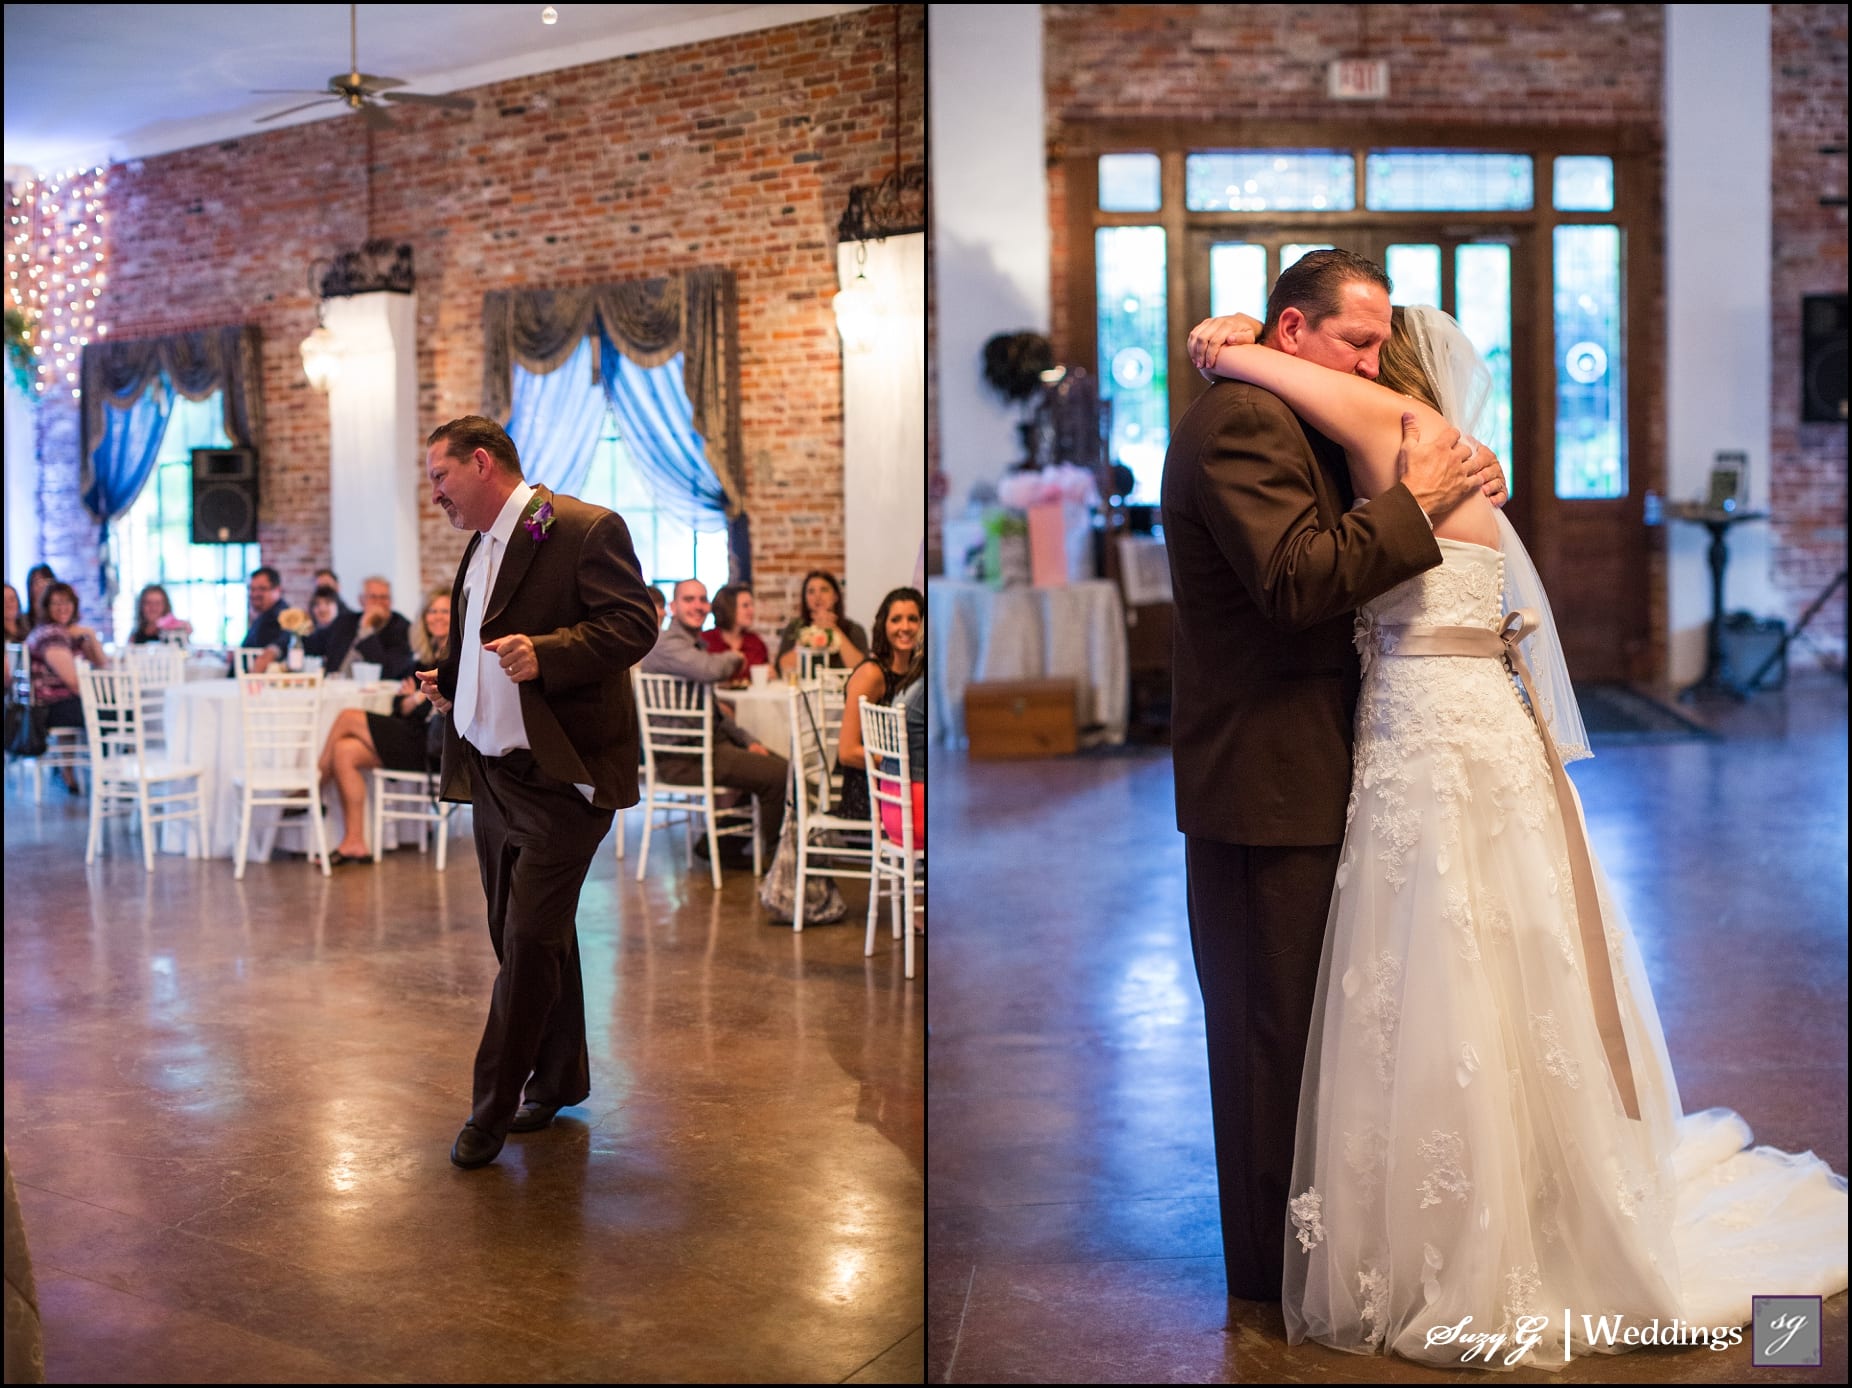 Amanda & Aaron ~ Point-Aux-Loups Springs Ballroom ~ Louisiana Wedding  Photography ~ Suzy G ~ New Orleans & Louisiana Wedding Photography